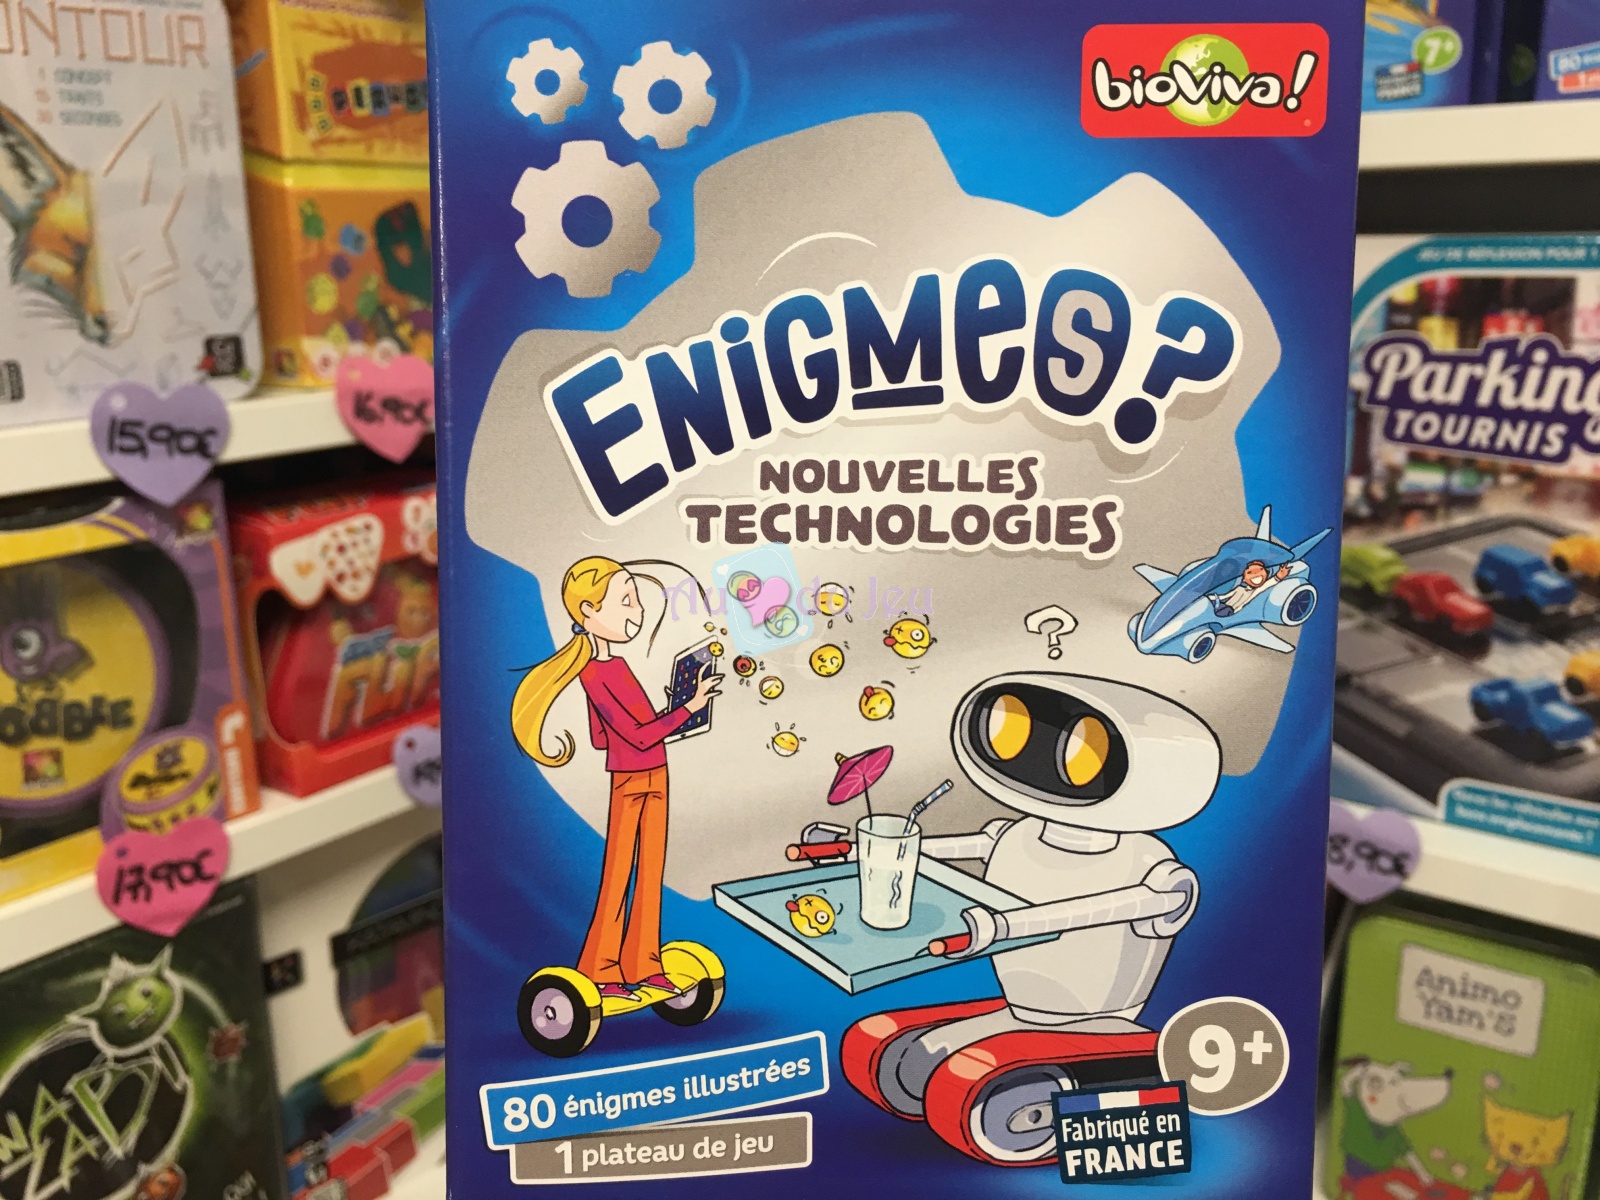 Enigmes - Nouvelles Technologies Bioviva